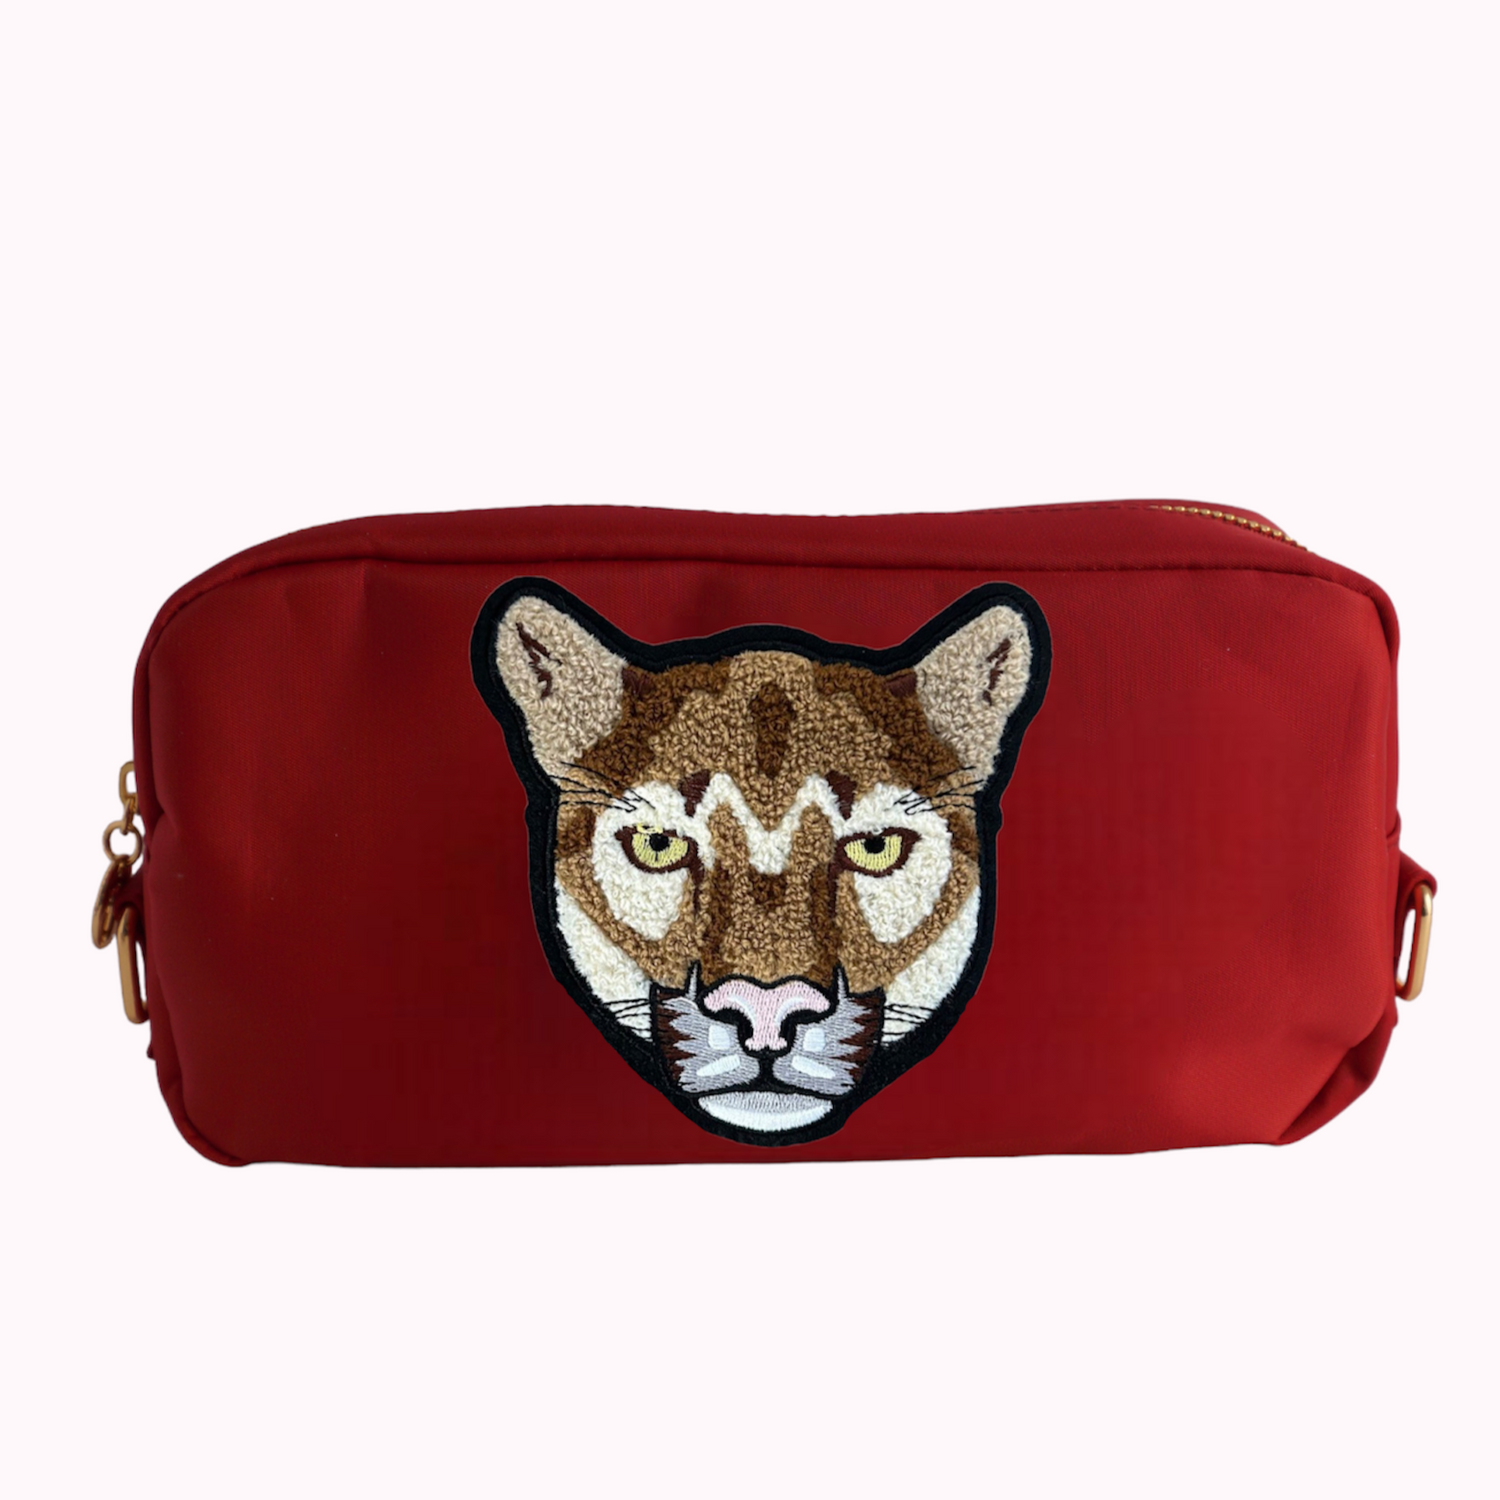 Crimson medium crossbody bag with cougar patch. 